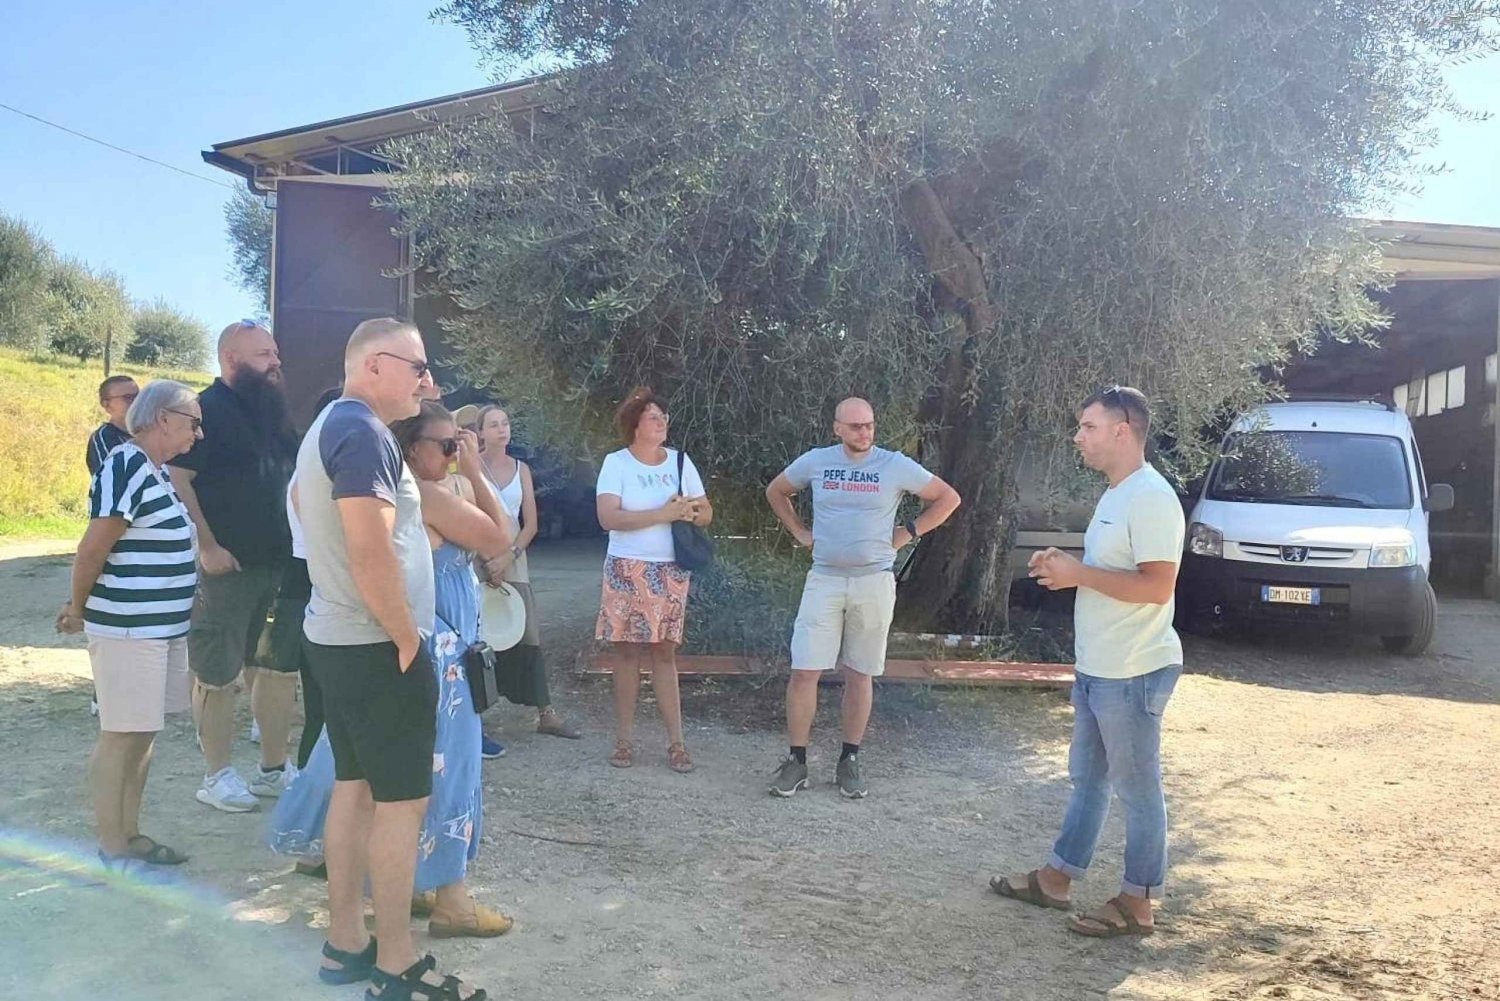 Seggiano: Typisk toskansk bondgårdstur med olivoljeprovning